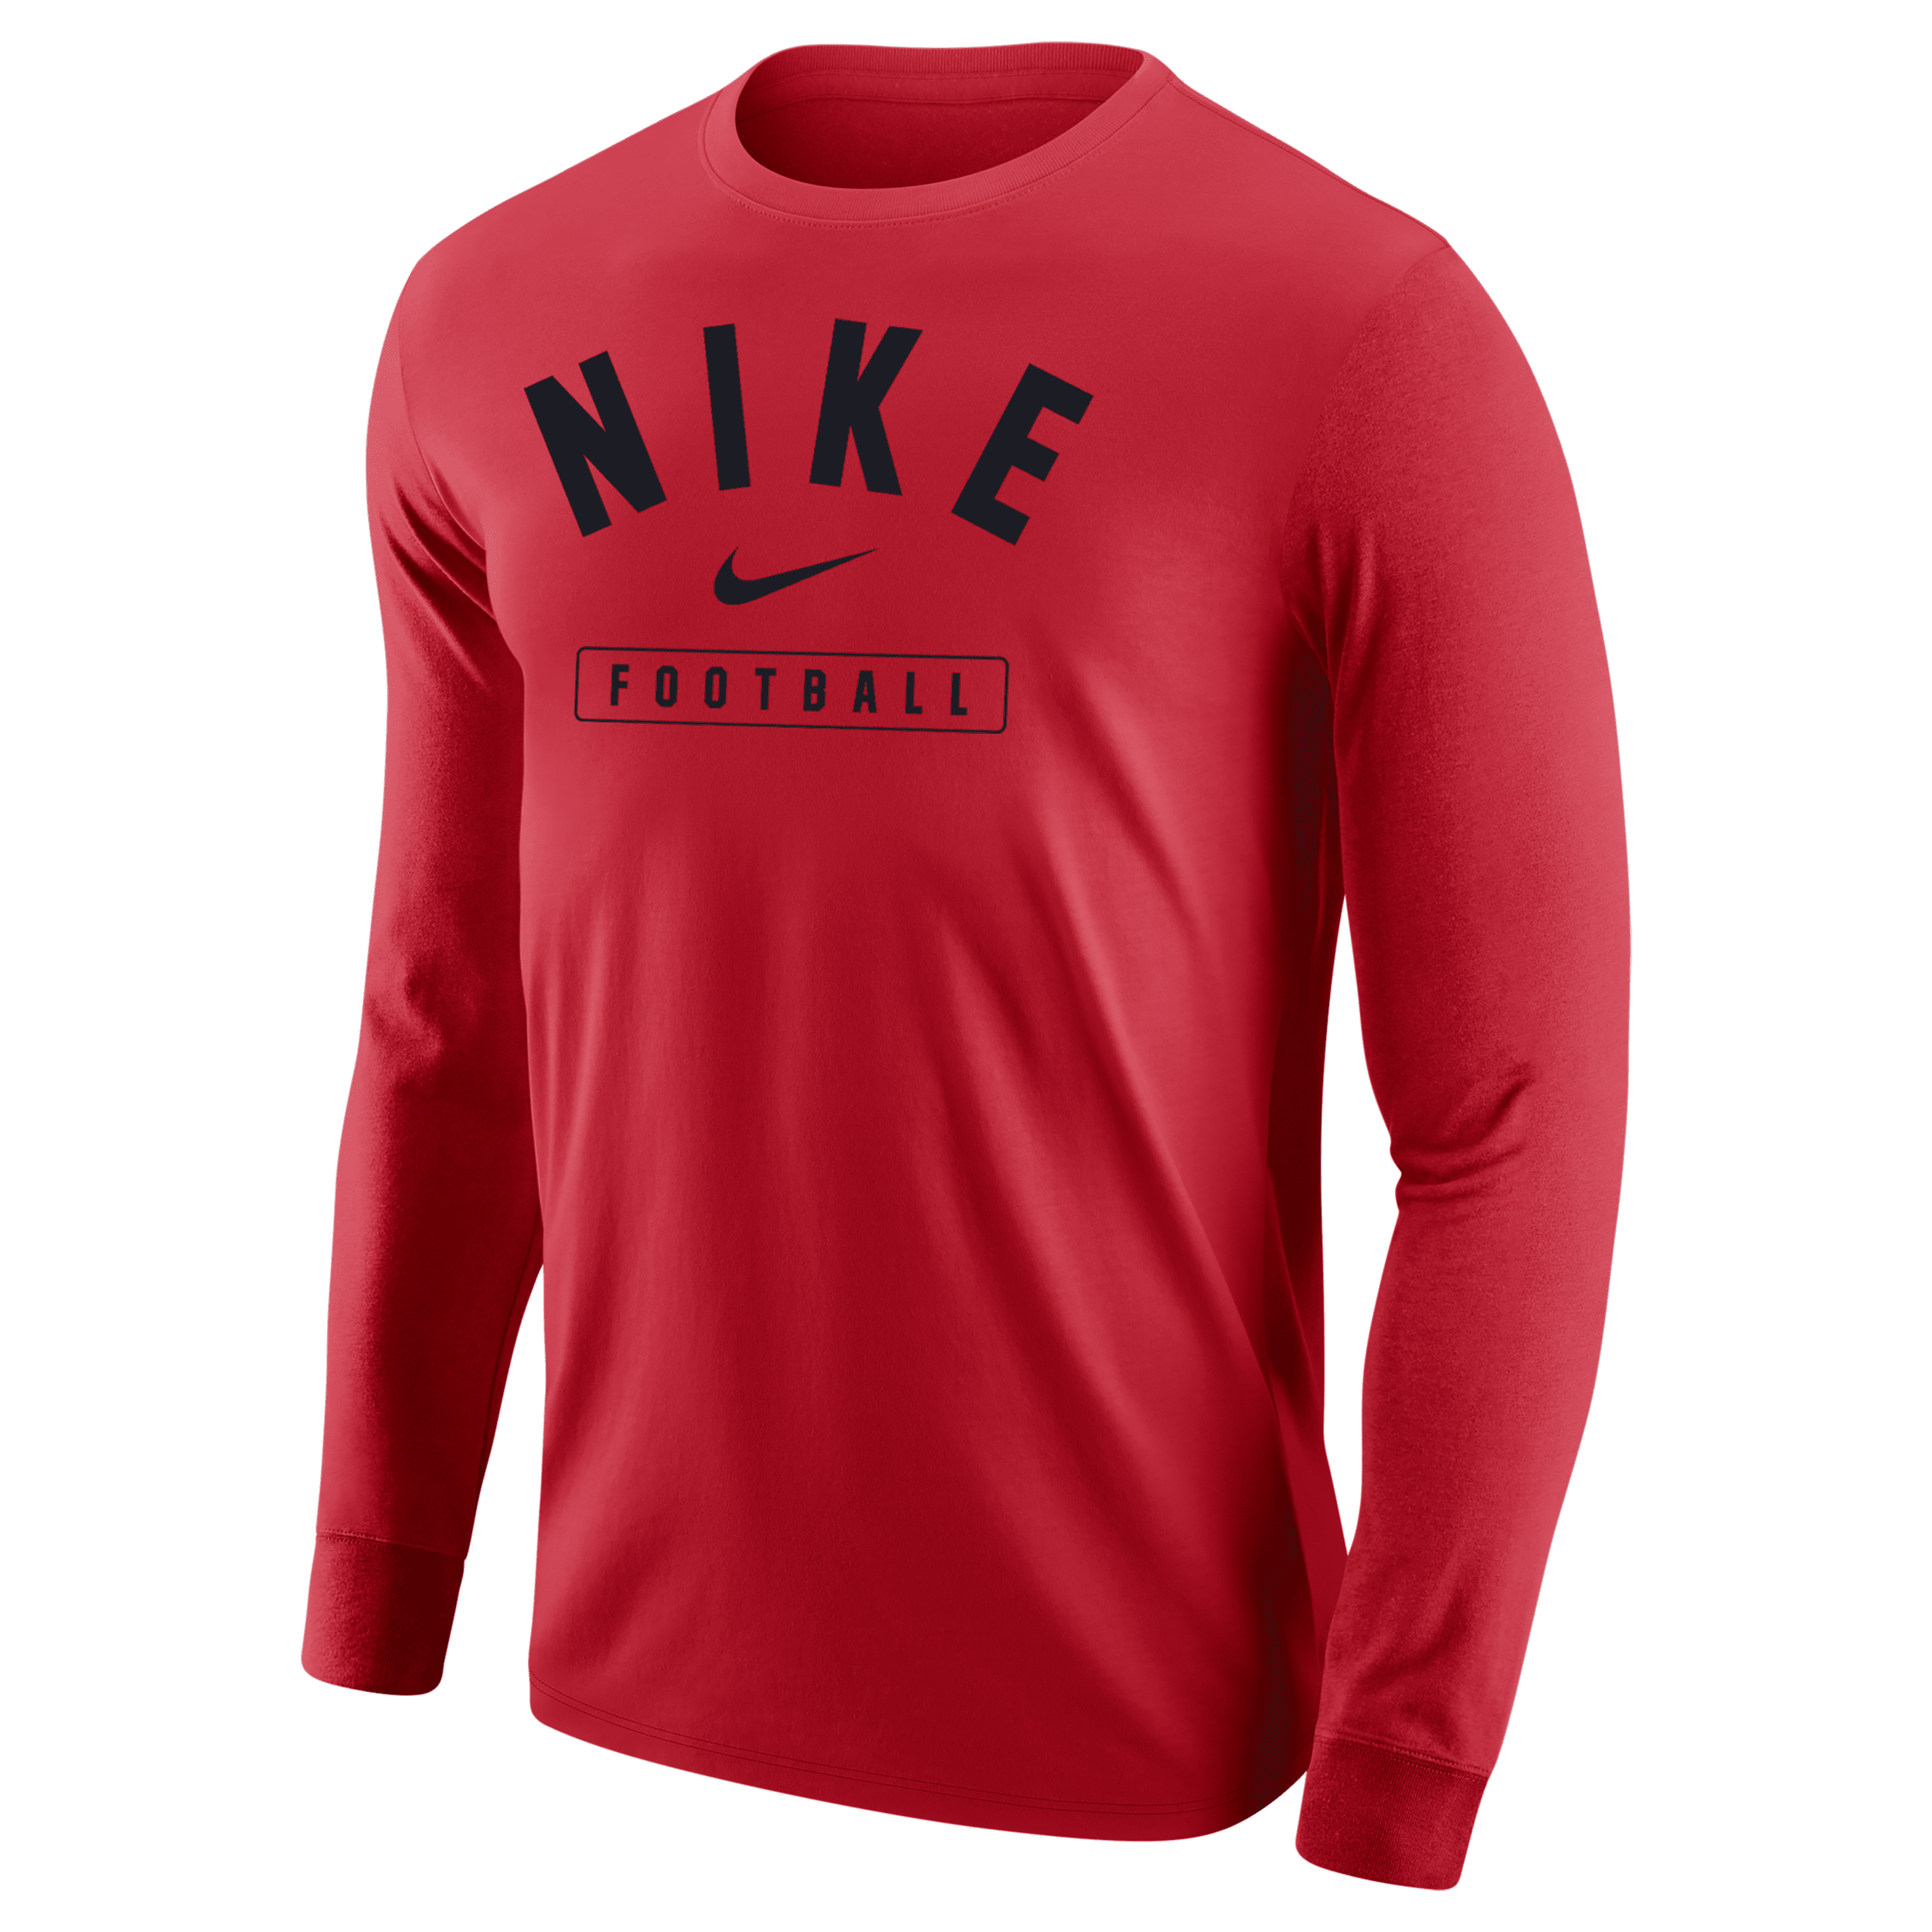 Nike Men's Football Long-sleeve T-shirt In Red